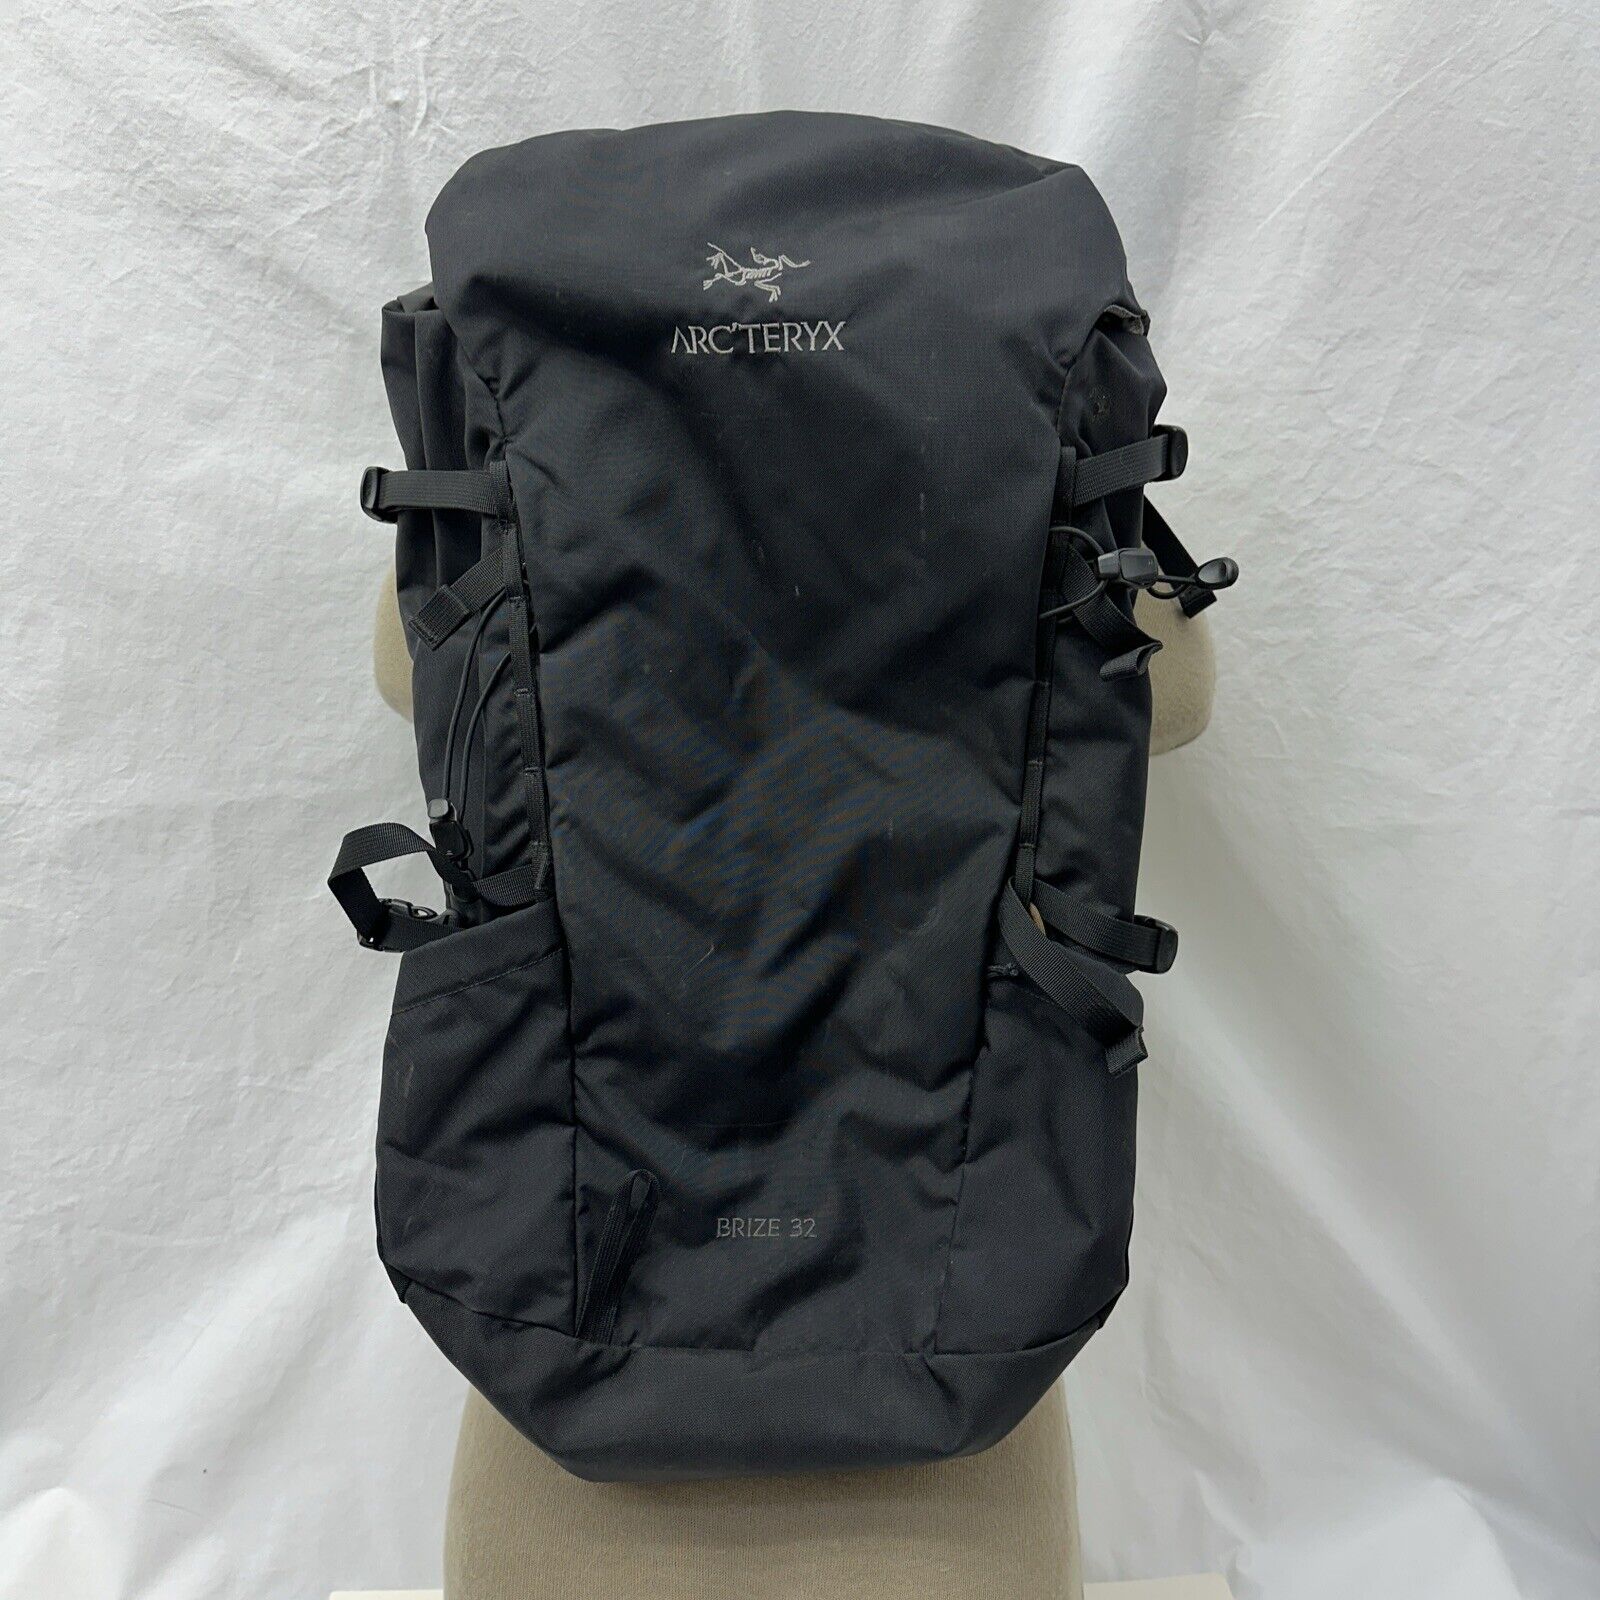 Used Arc’teryx Brize 32 Hiking Backpack Daypack Nylon Black Adjustable Straps